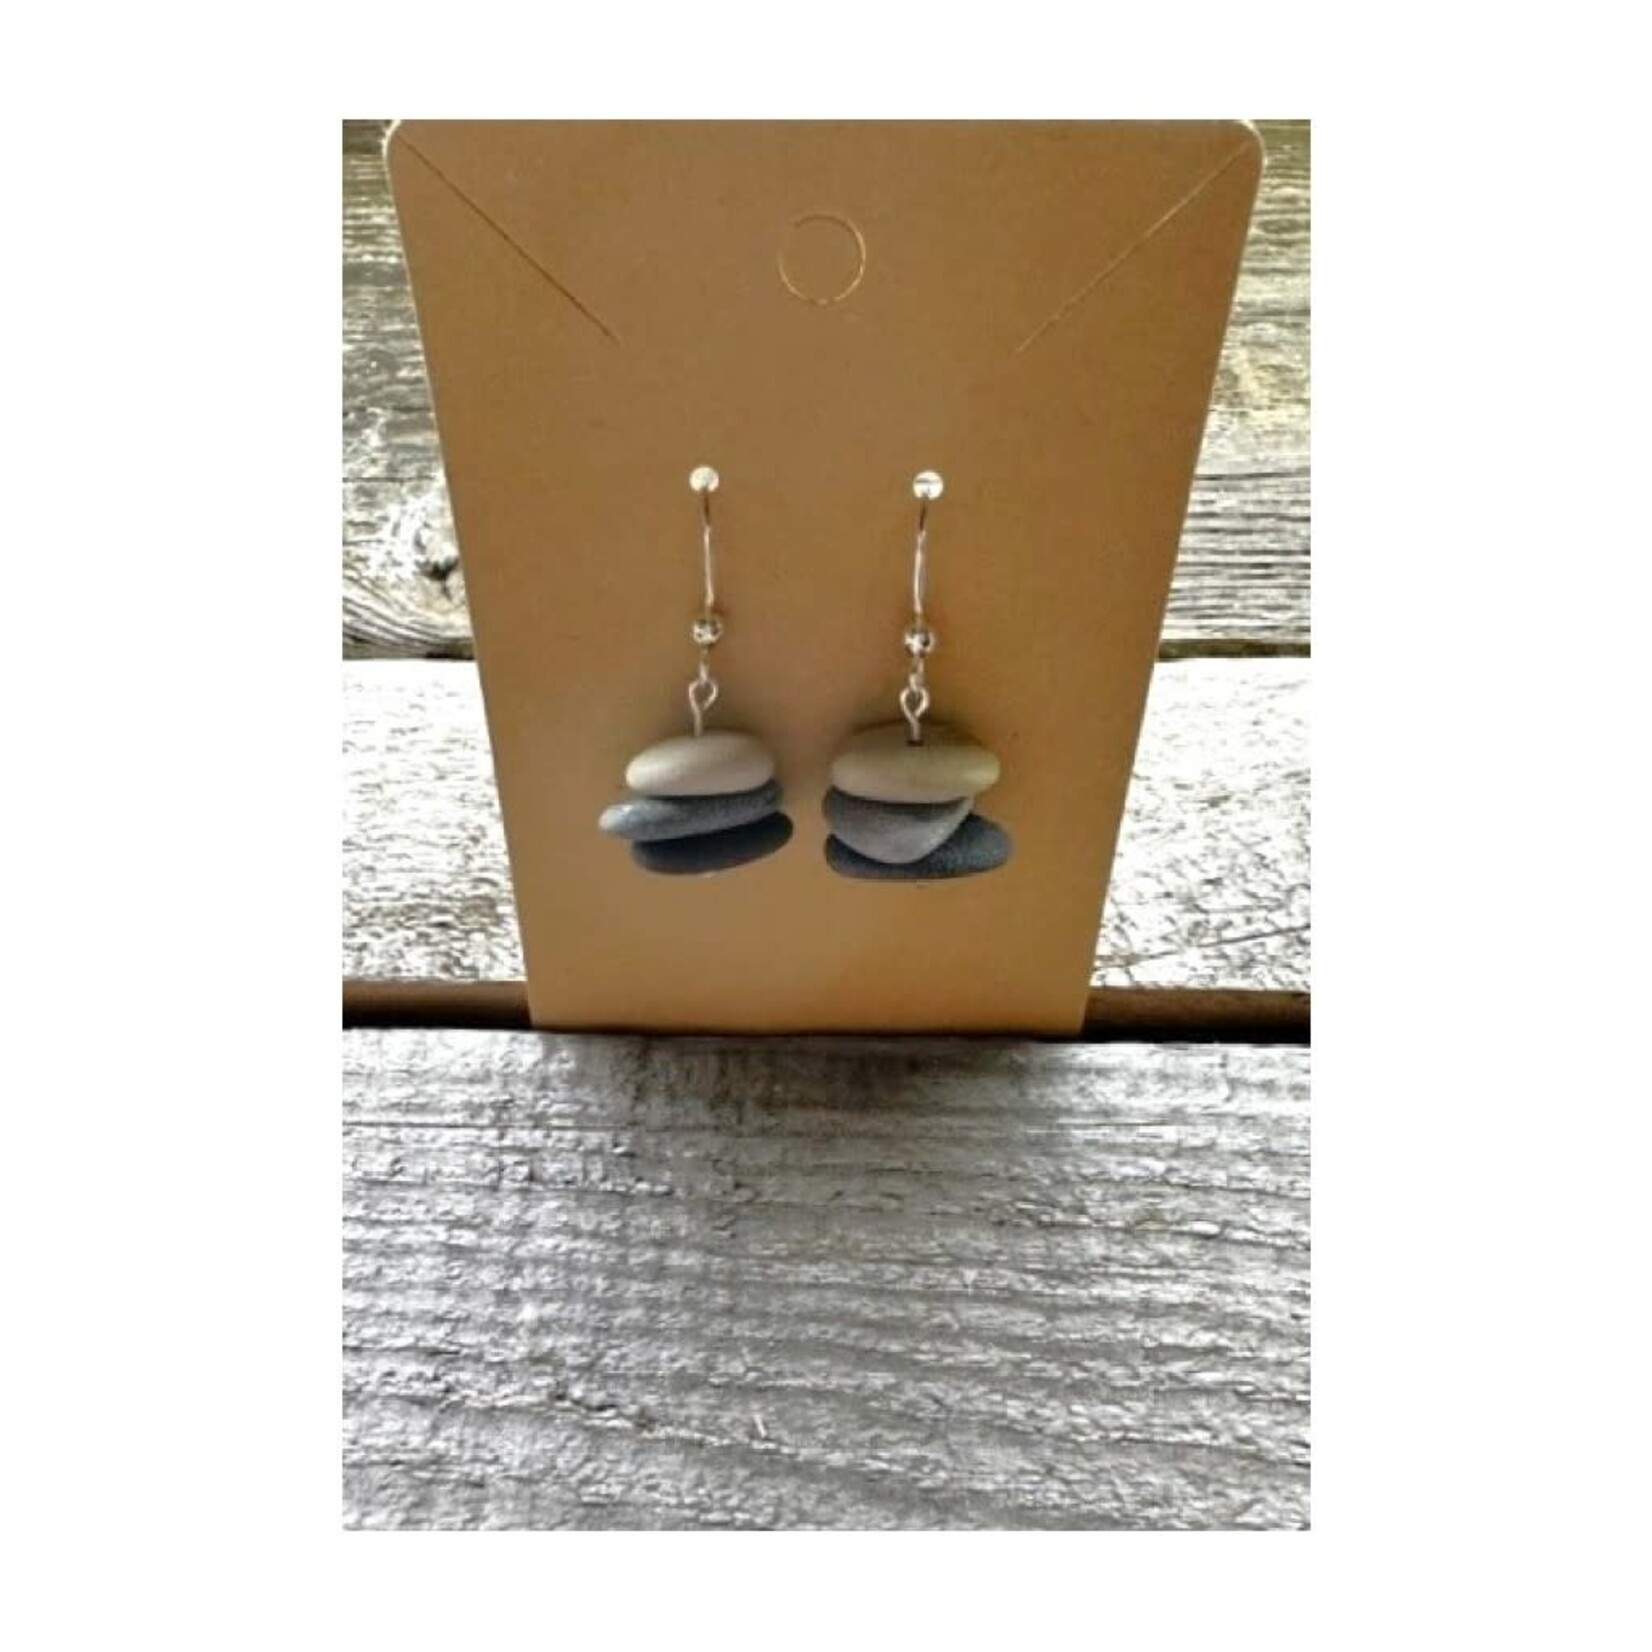 French Hook Earrings - Stone Cairn 33